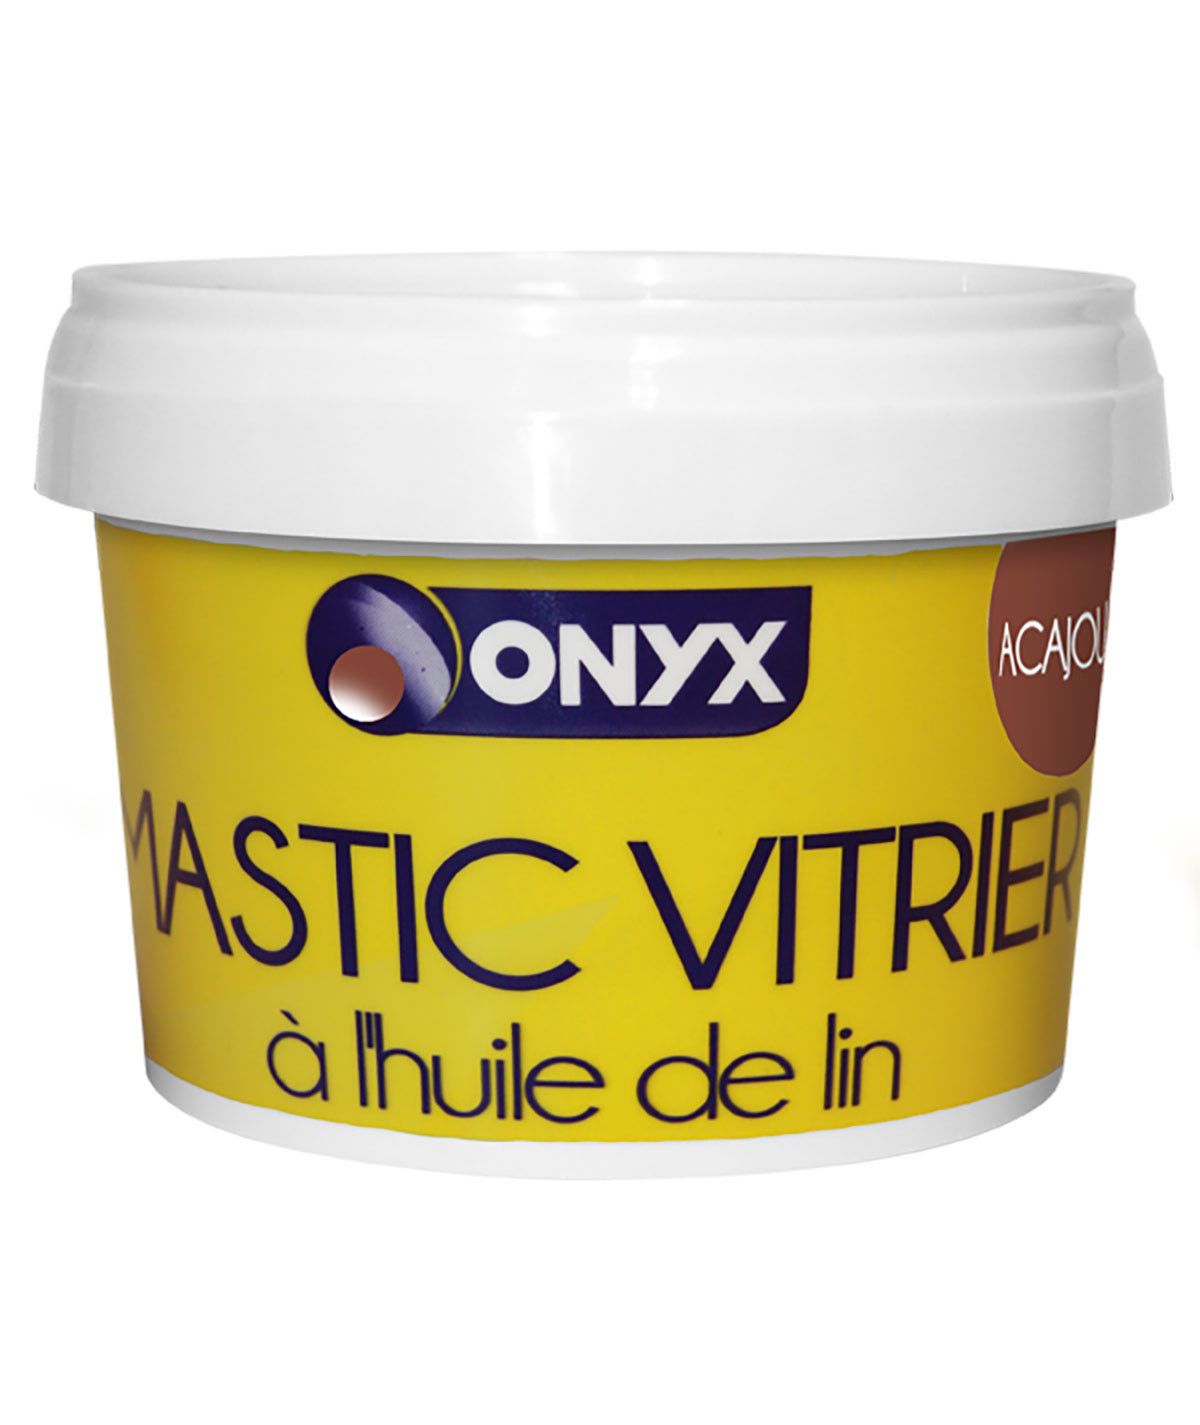 Mastic Vitrier Acajou - 500g Onyx